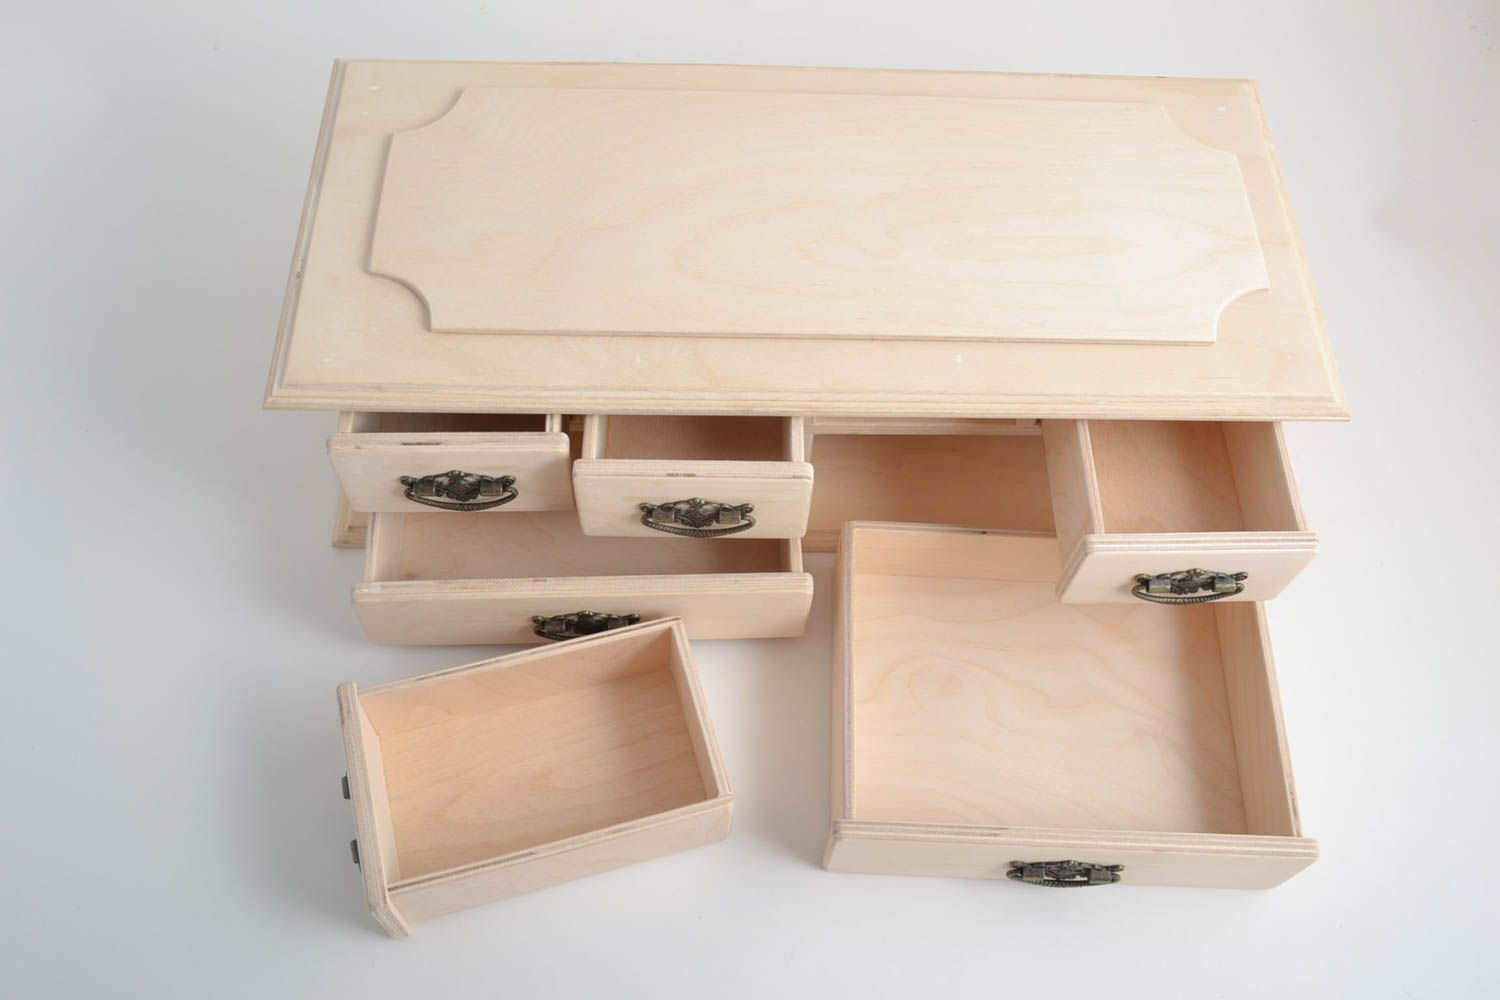 Unusual handmade wooden blank box wooden dresser decoupage crafts gift ideas photo 3